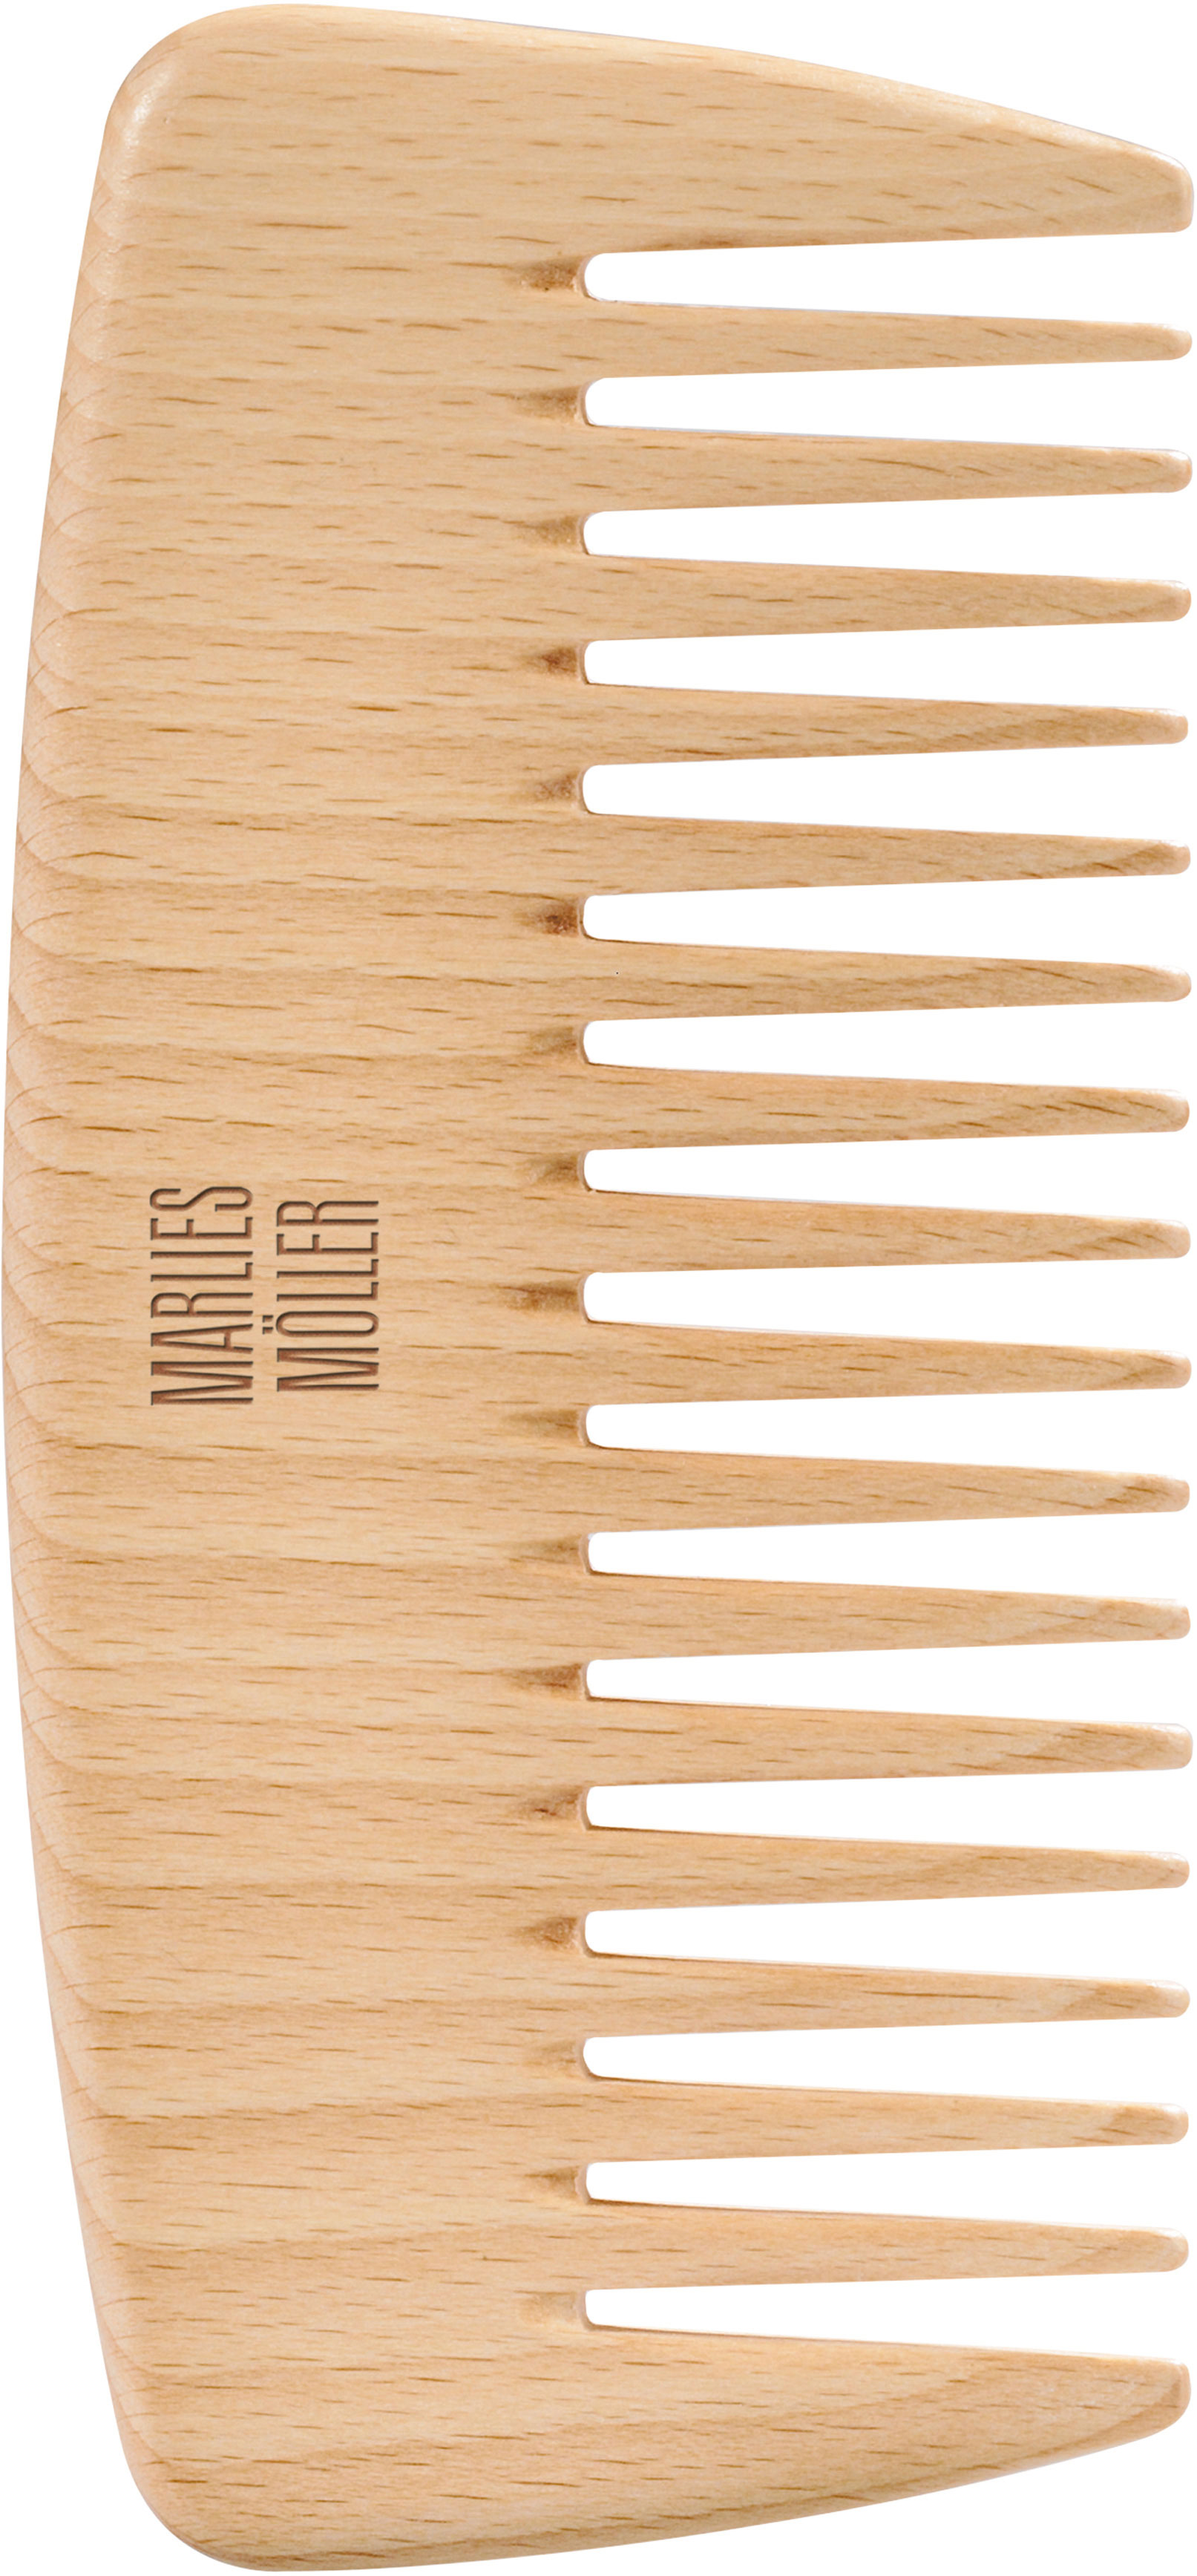 Marlies Möller Style Allround Curl Comb